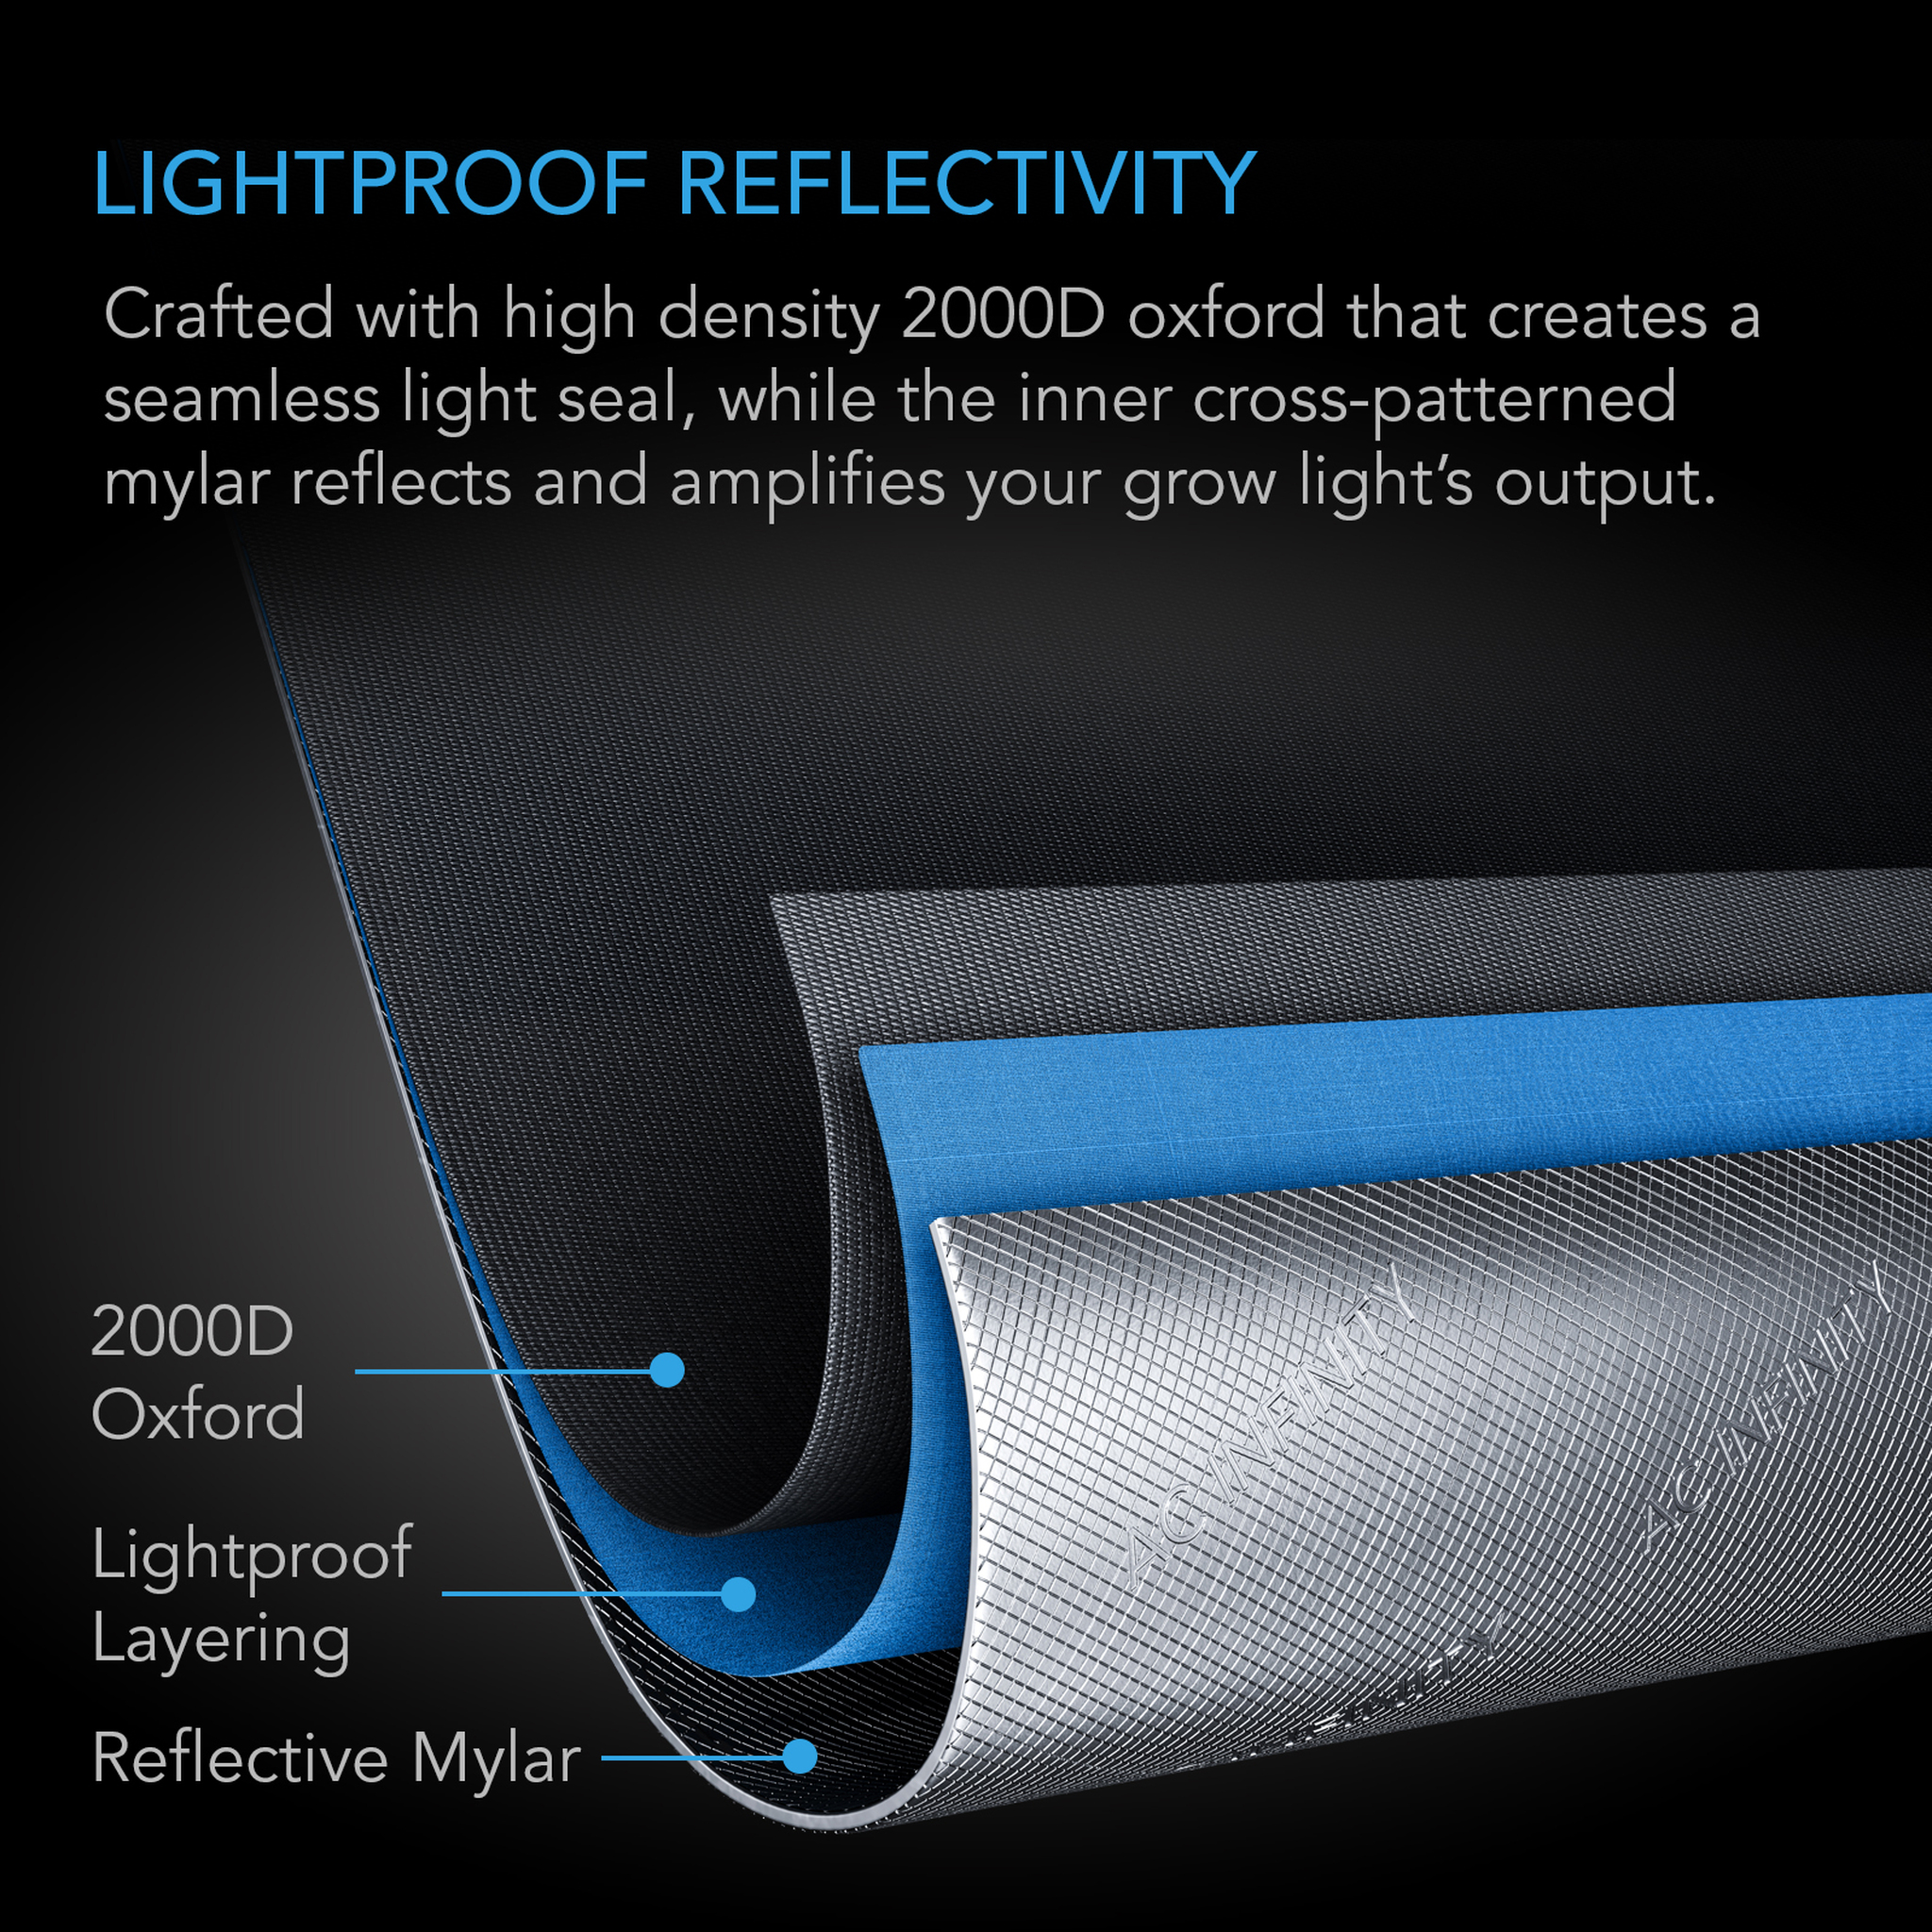 Light proof reflectivity